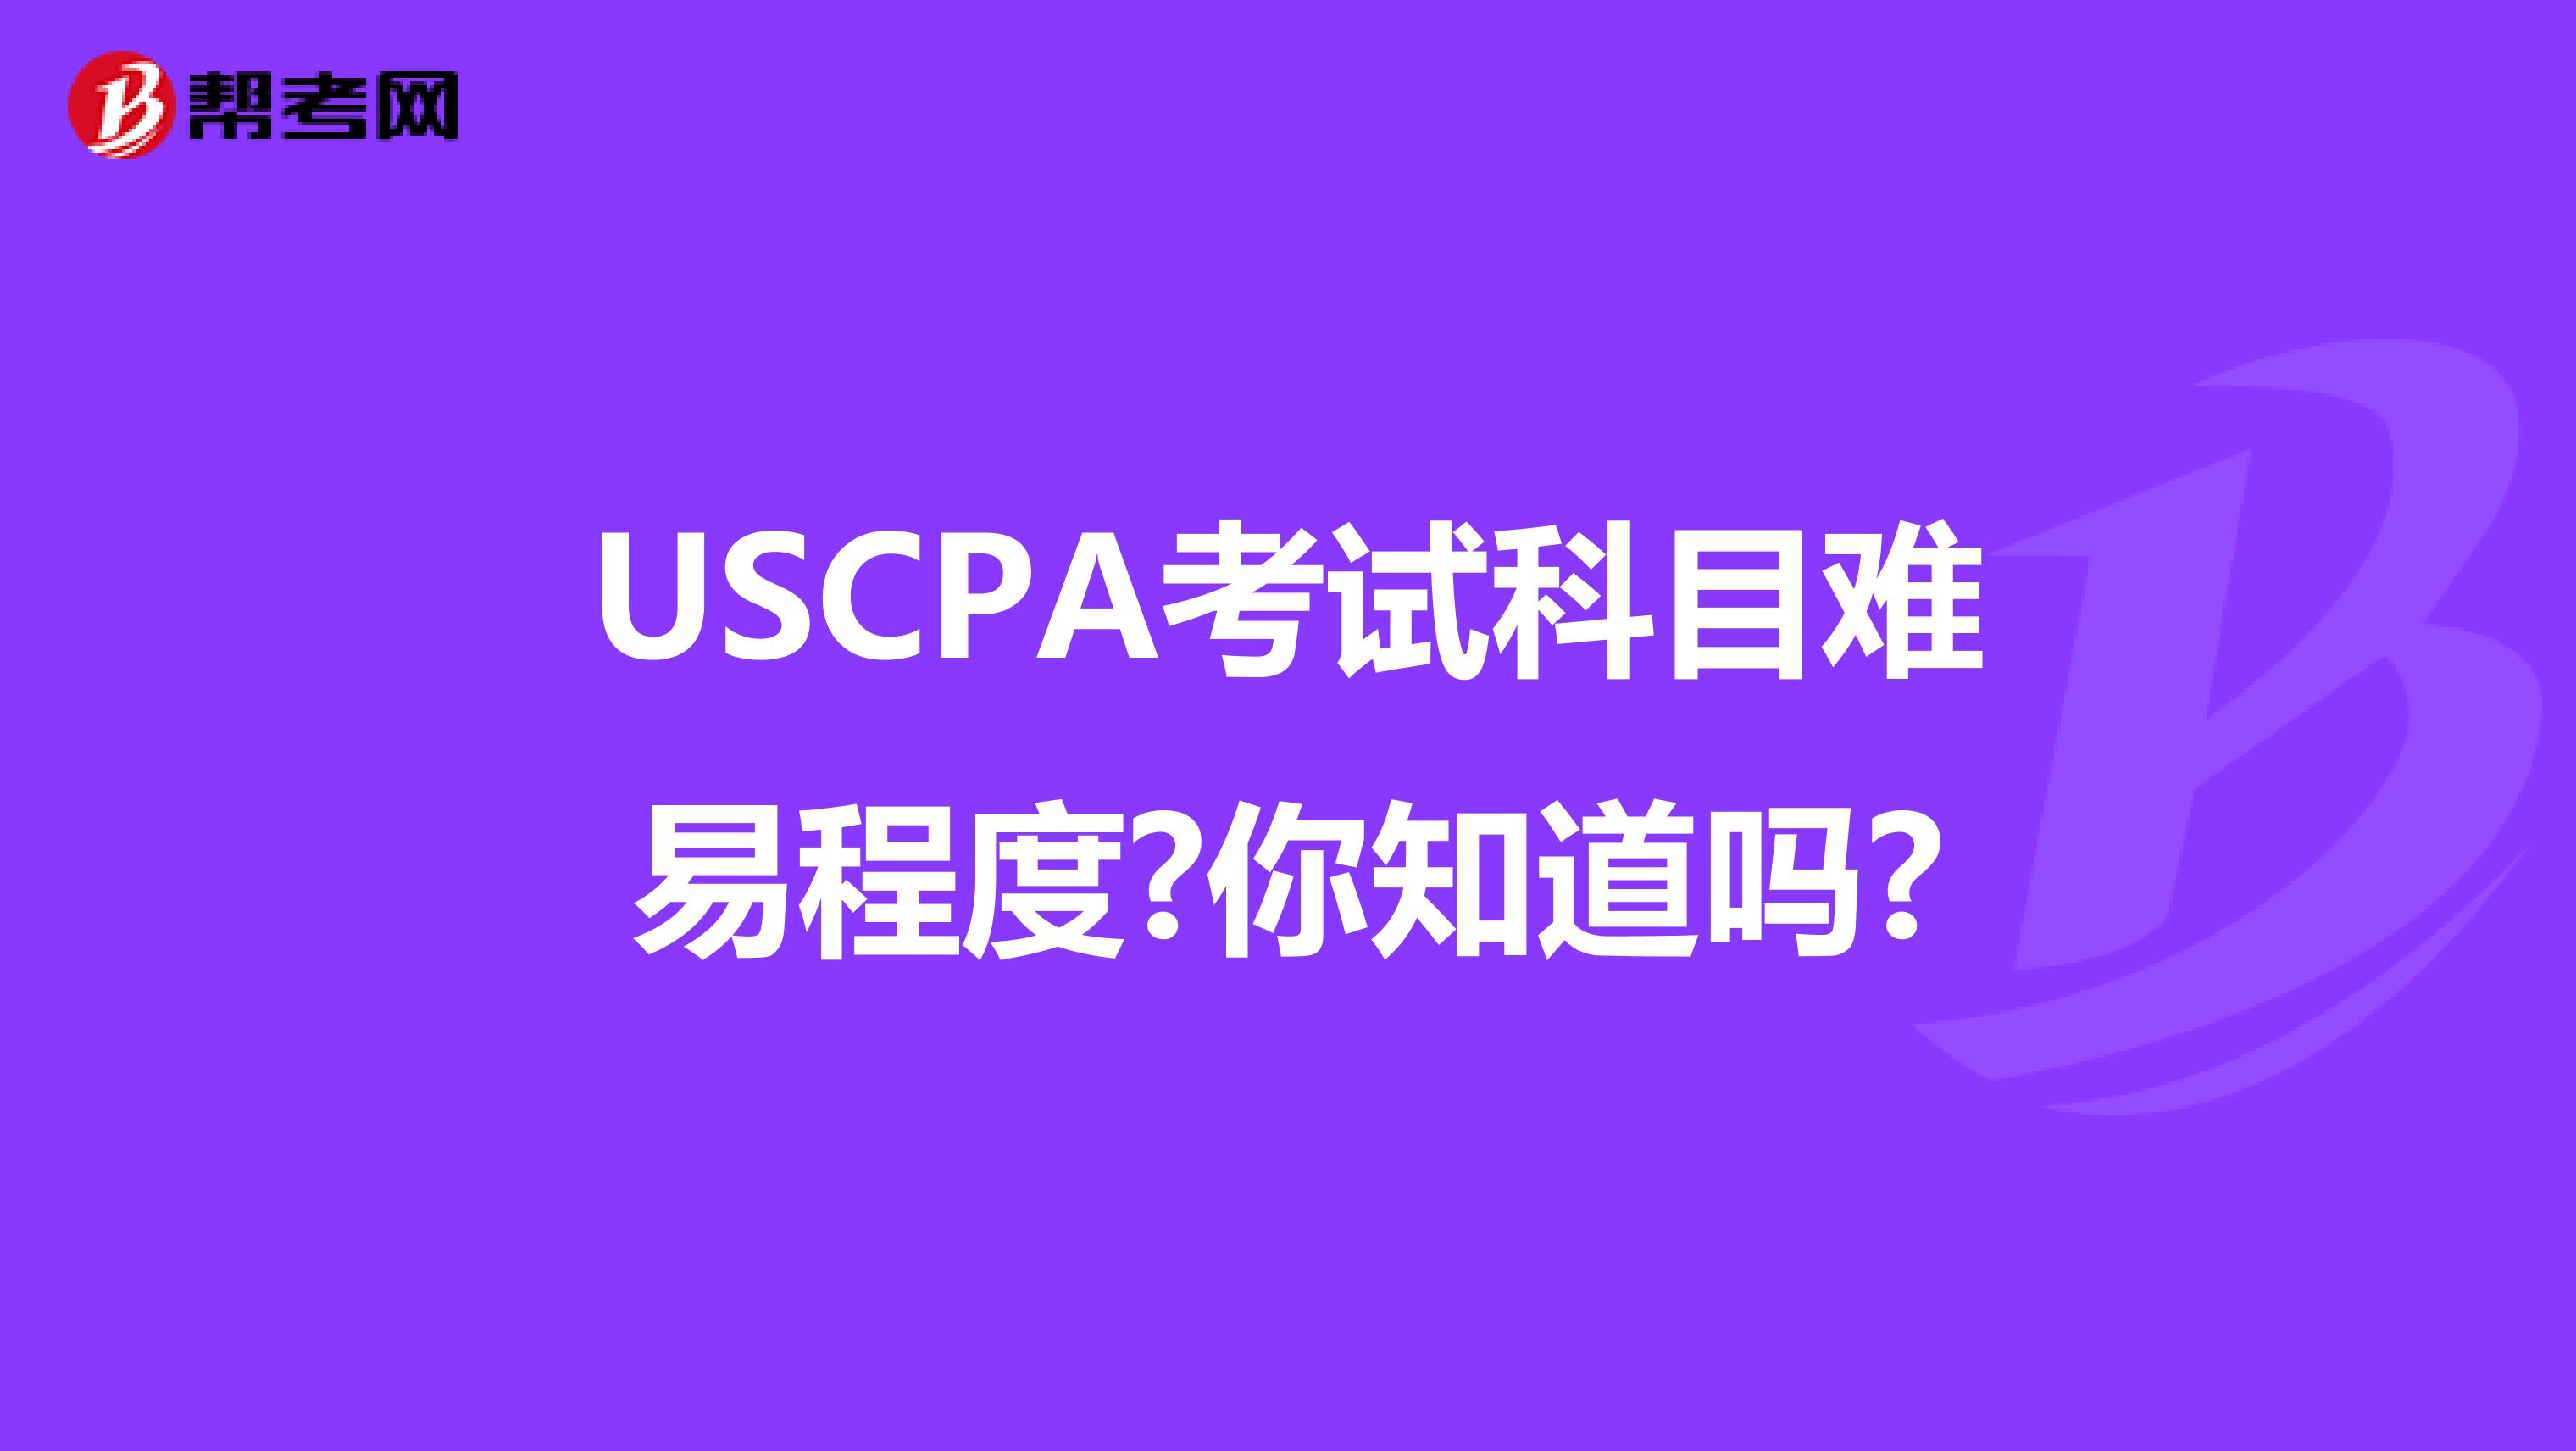 USCPA考试科目难易程度?你知道吗?